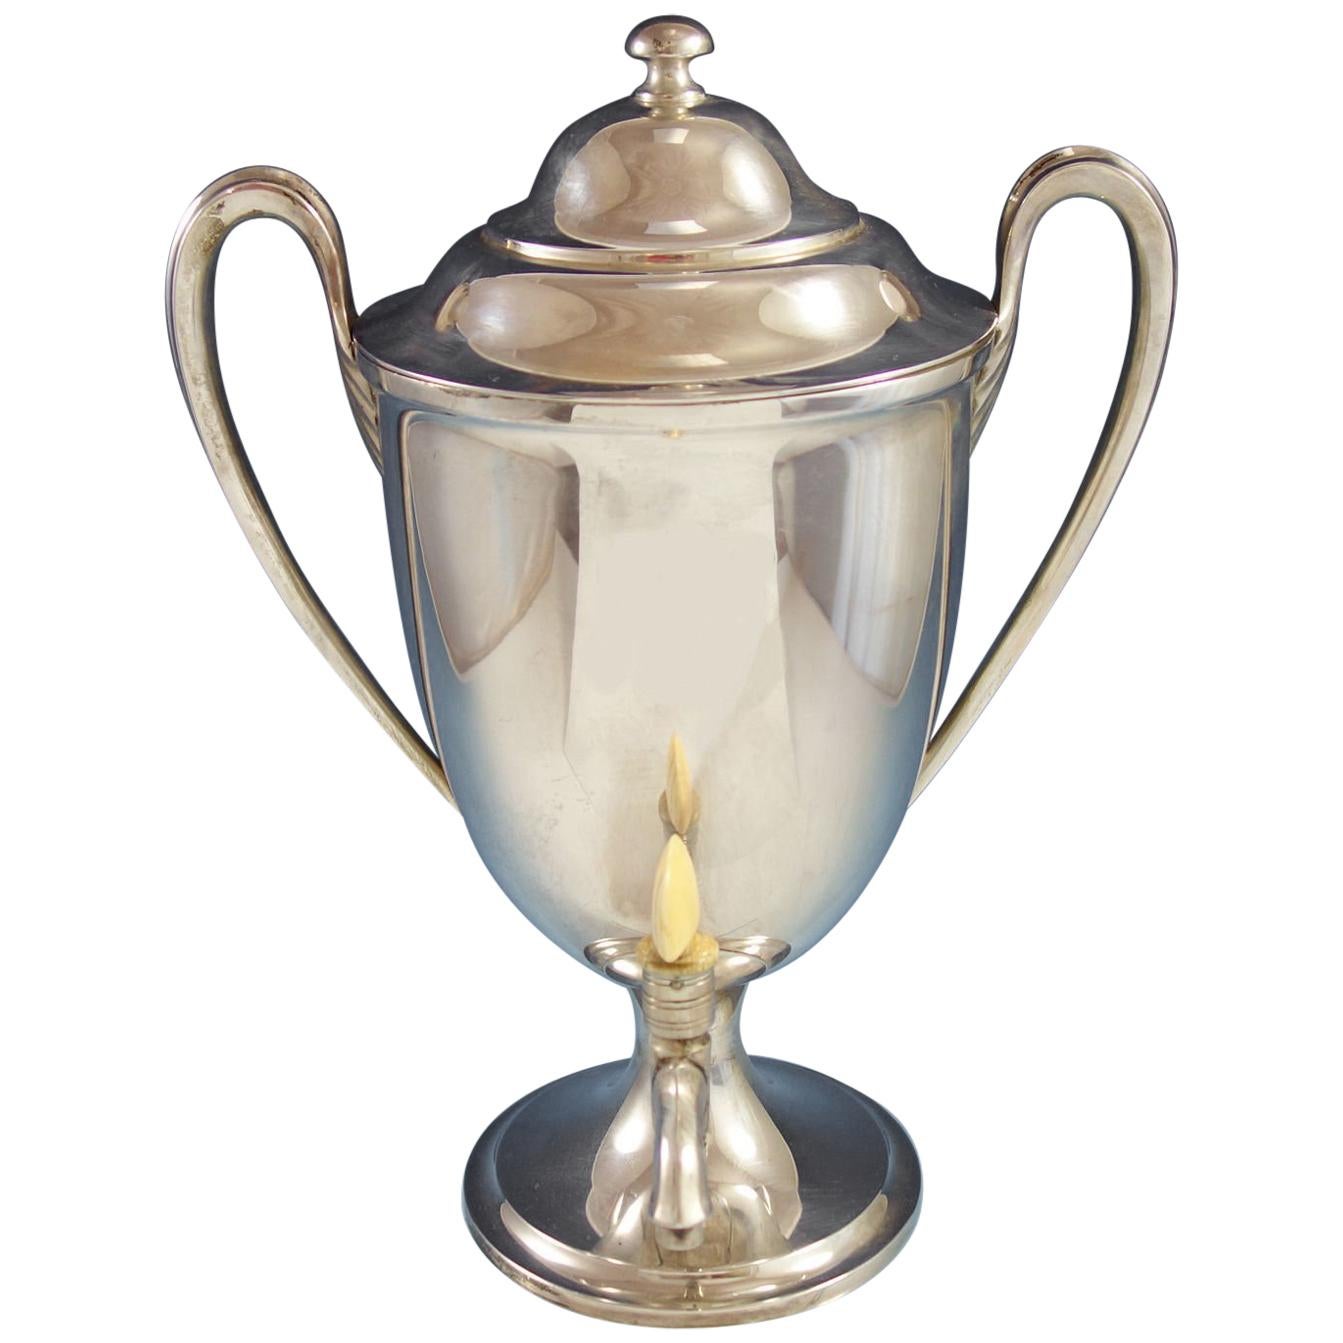 Paul Revere by Tuttle Sterling Silver Hot Water Urn or Samovar #798